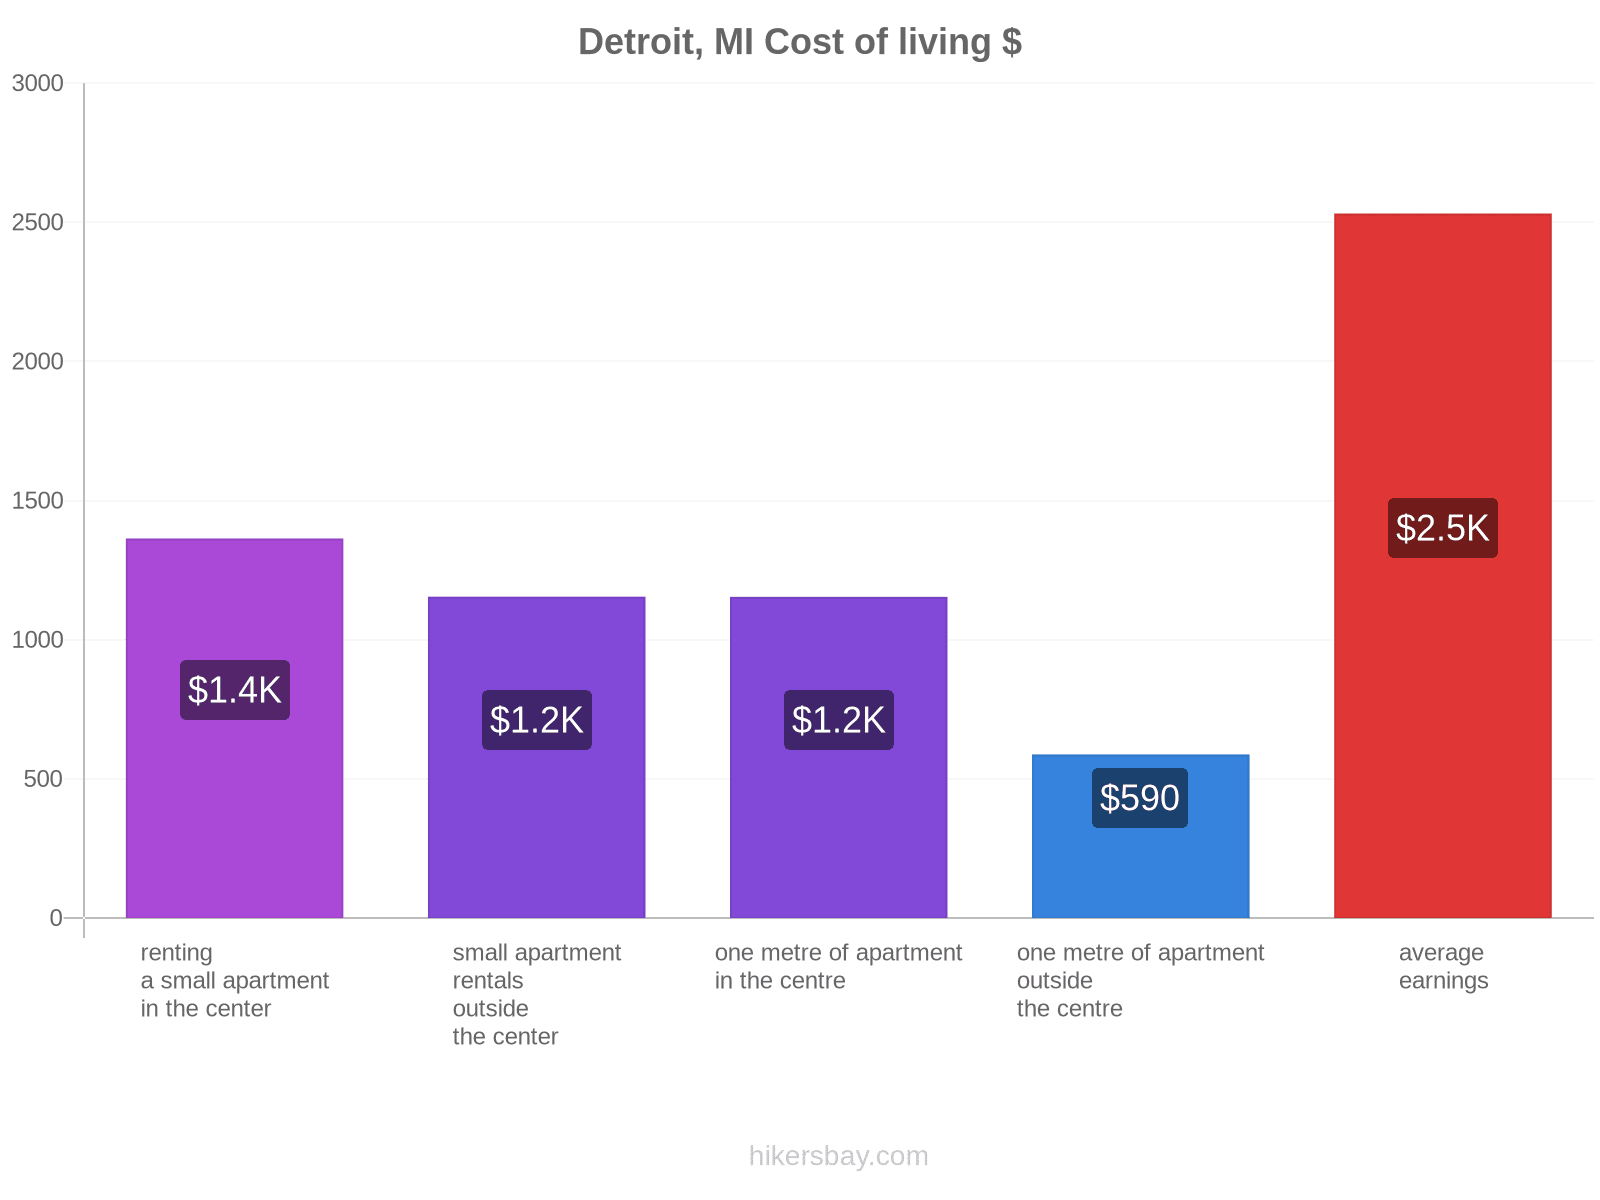 Detroit, MI cost of living hikersbay.com